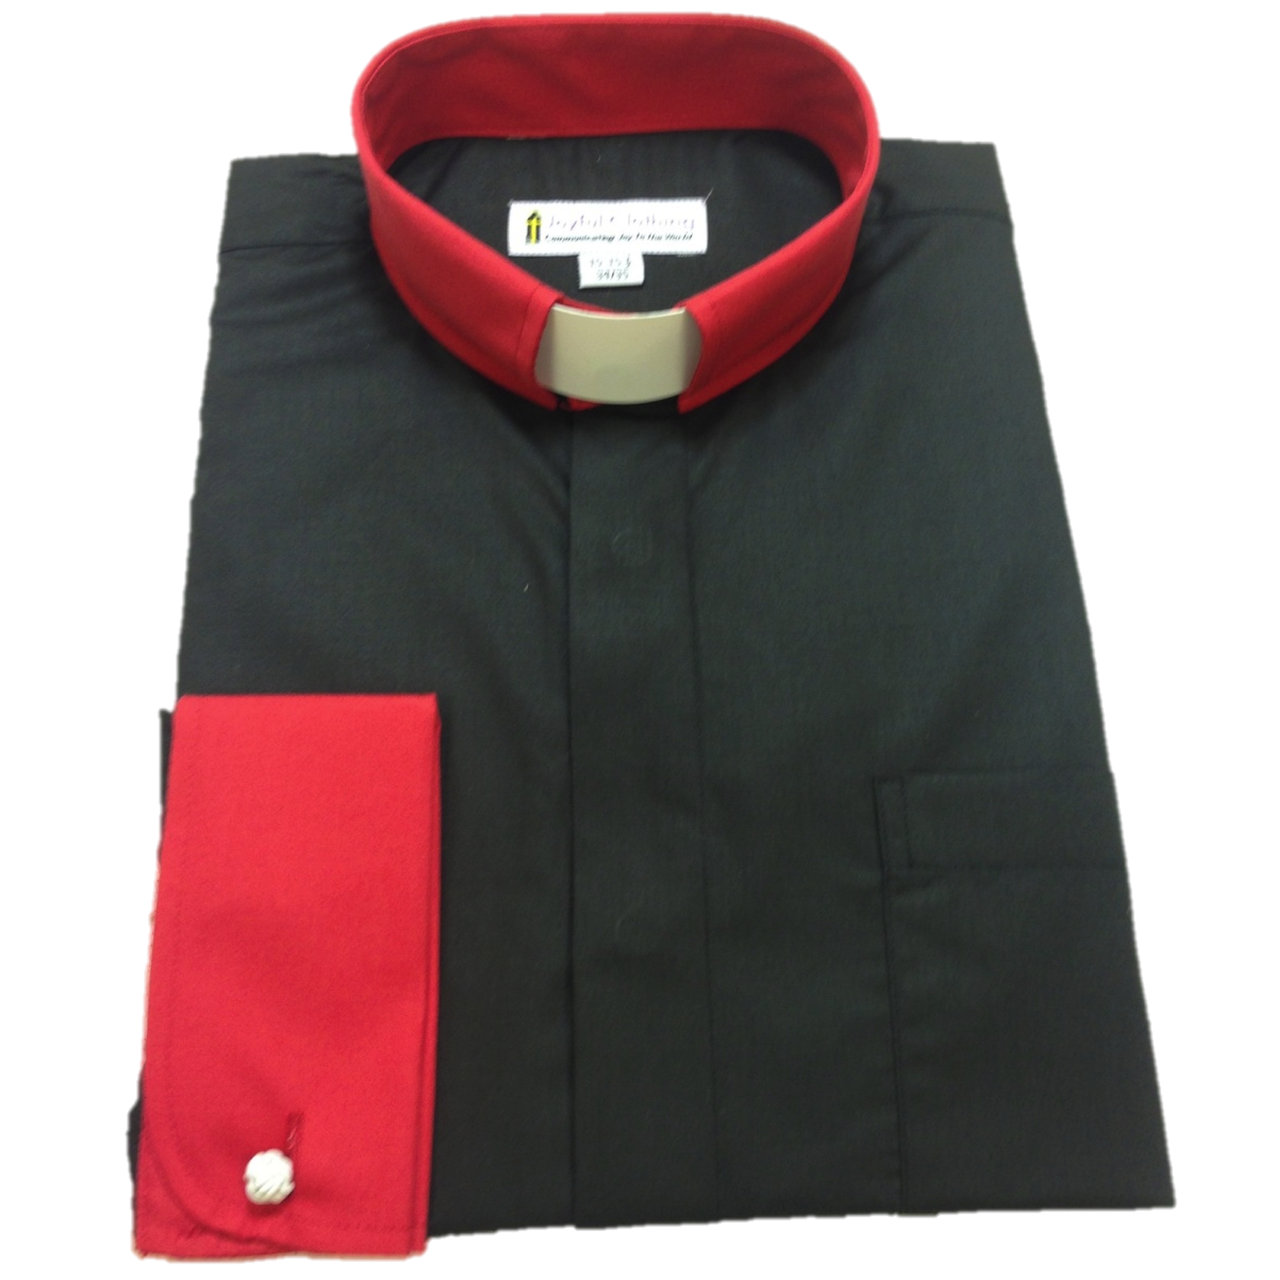 130. Men's Contrast Tab-Collar Clergy Shirt - Black/Red Collar